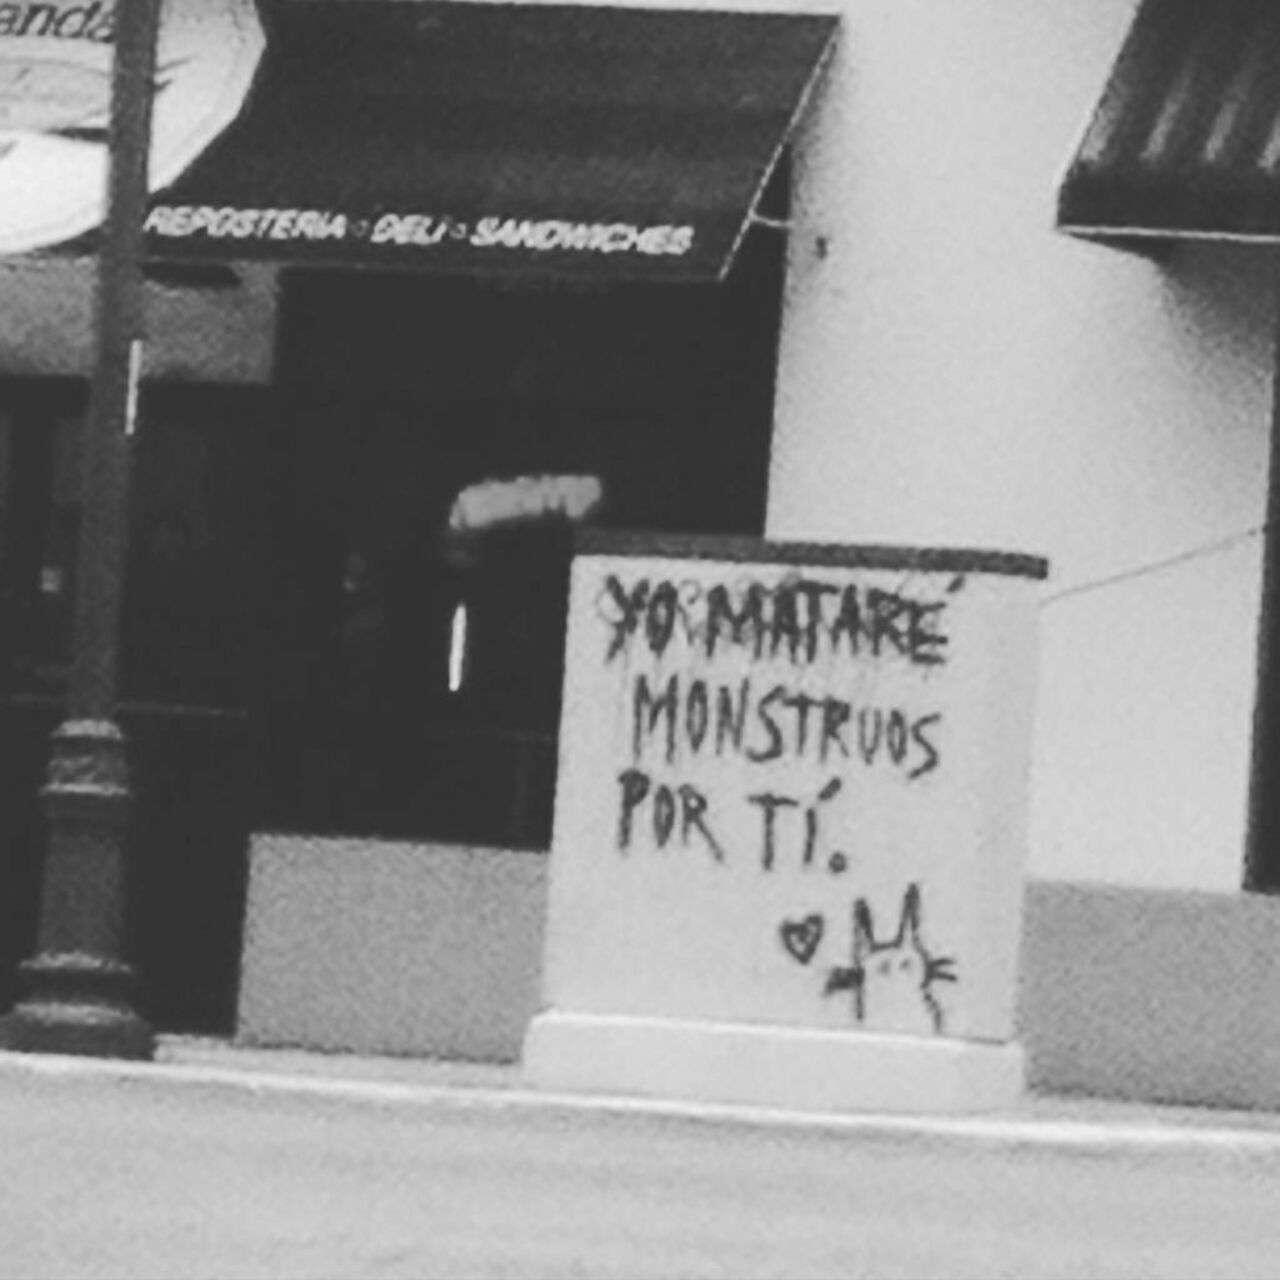 "Yo mataré monstruos por tí" 
#accionpoeticapr #santurce #graffiti #streetart #streetartpr by dian2a https://t.co/y1QPmu5ig3